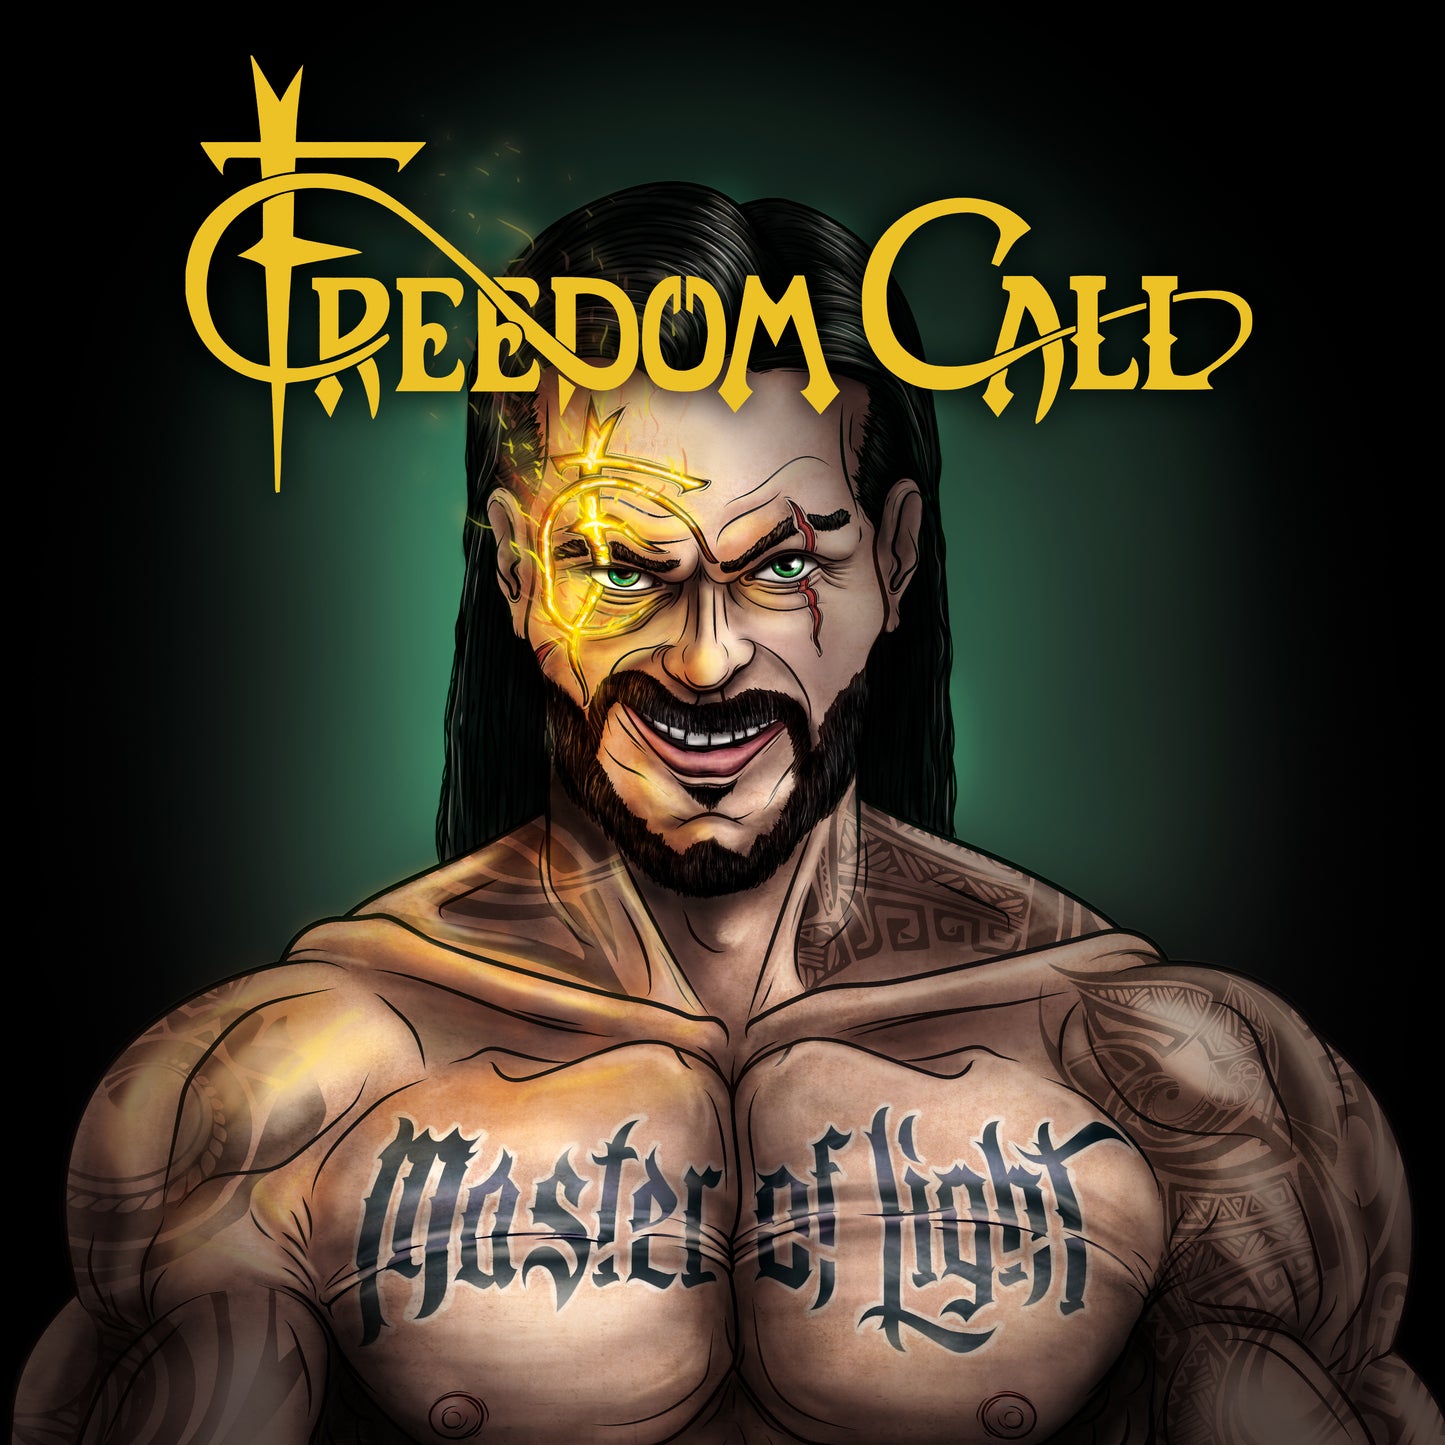 Freedom Call "Master Of Light" CD